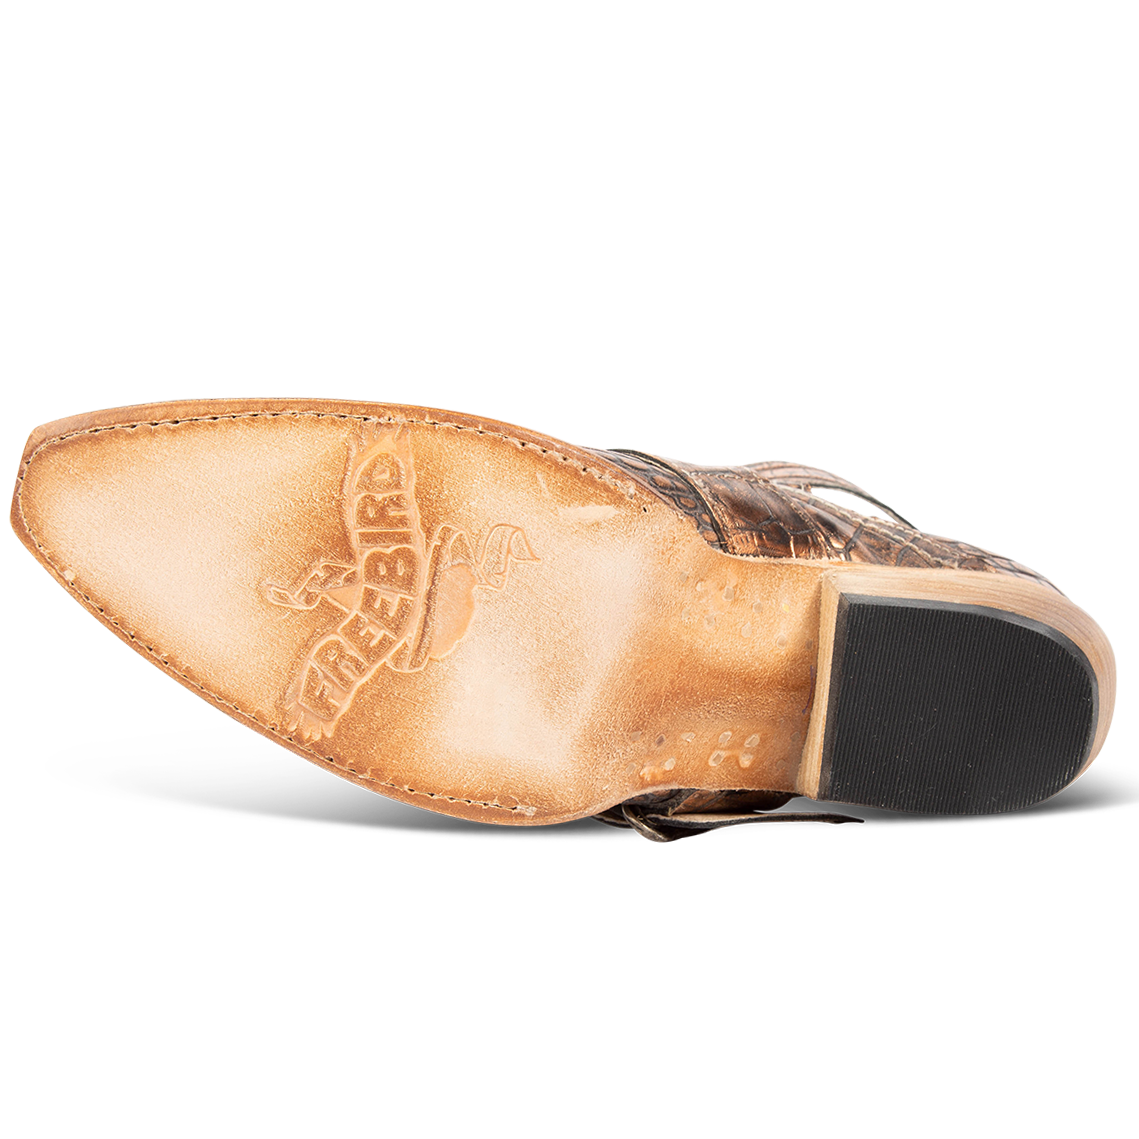 Leather sole imprinted with FREEBIRD on women's Mayhem blush croco westen ankle bootie